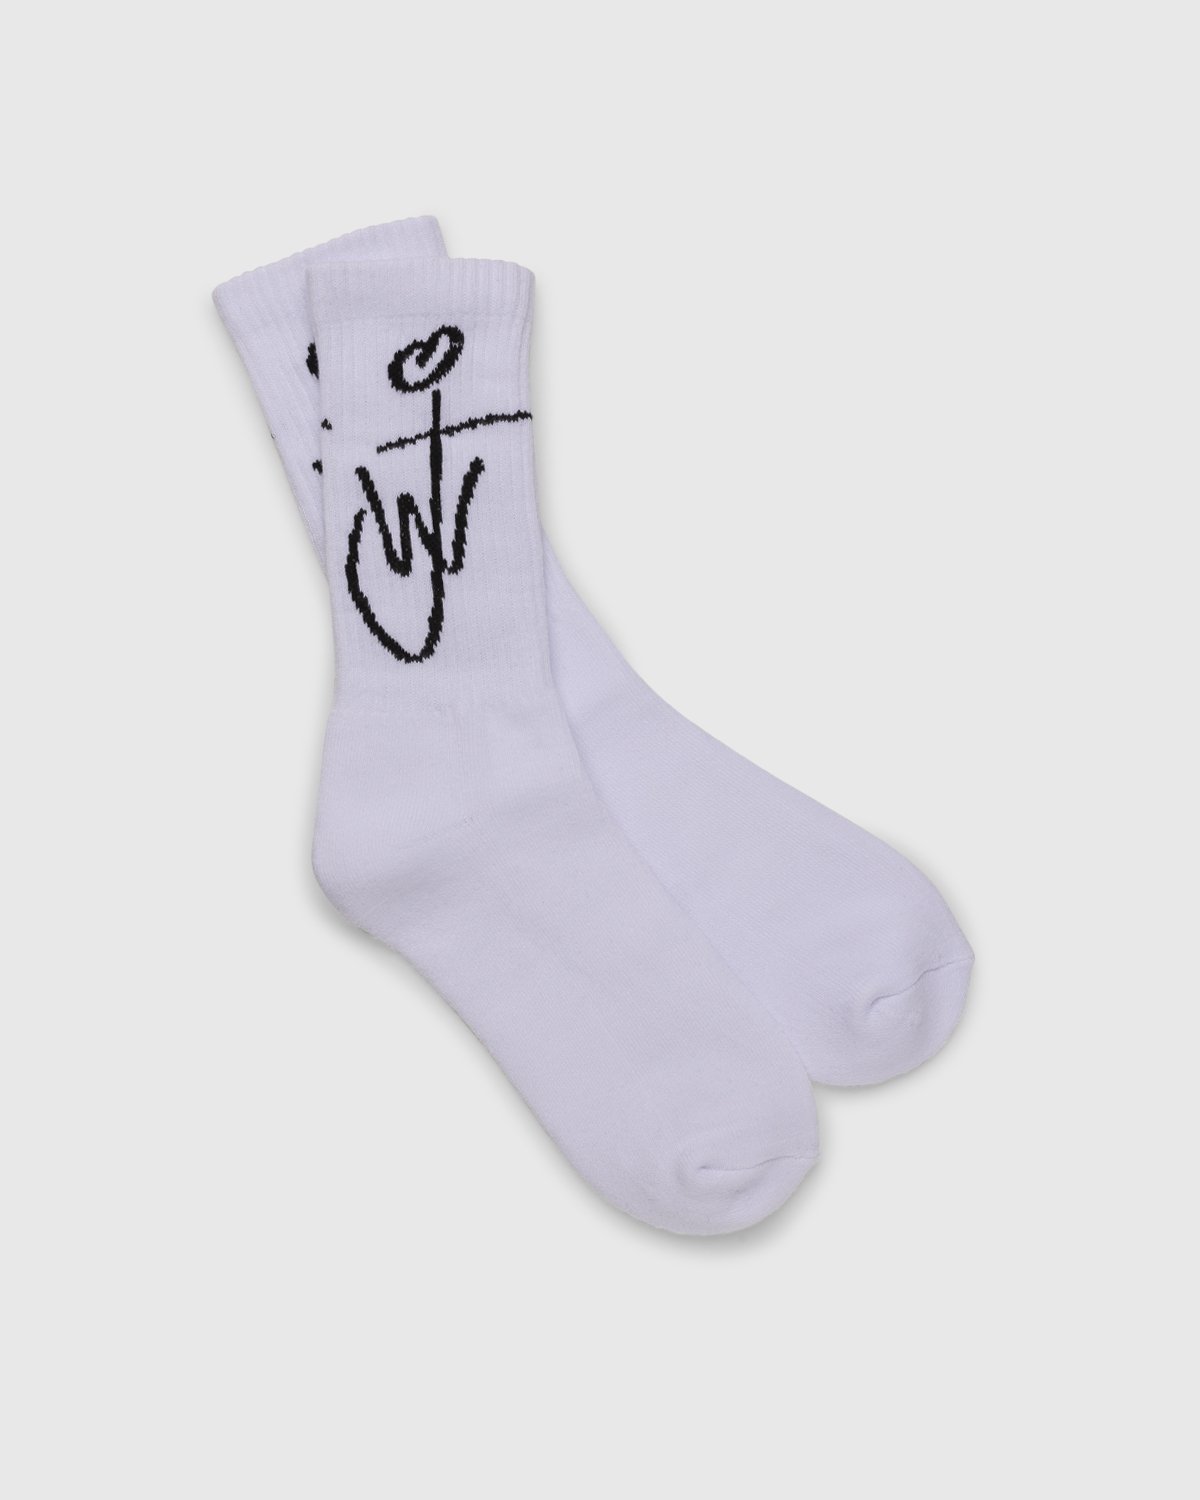 J.W. Anderson - JWA Logo Short Ankle Socks White/Black - Accessories - White - Image 1